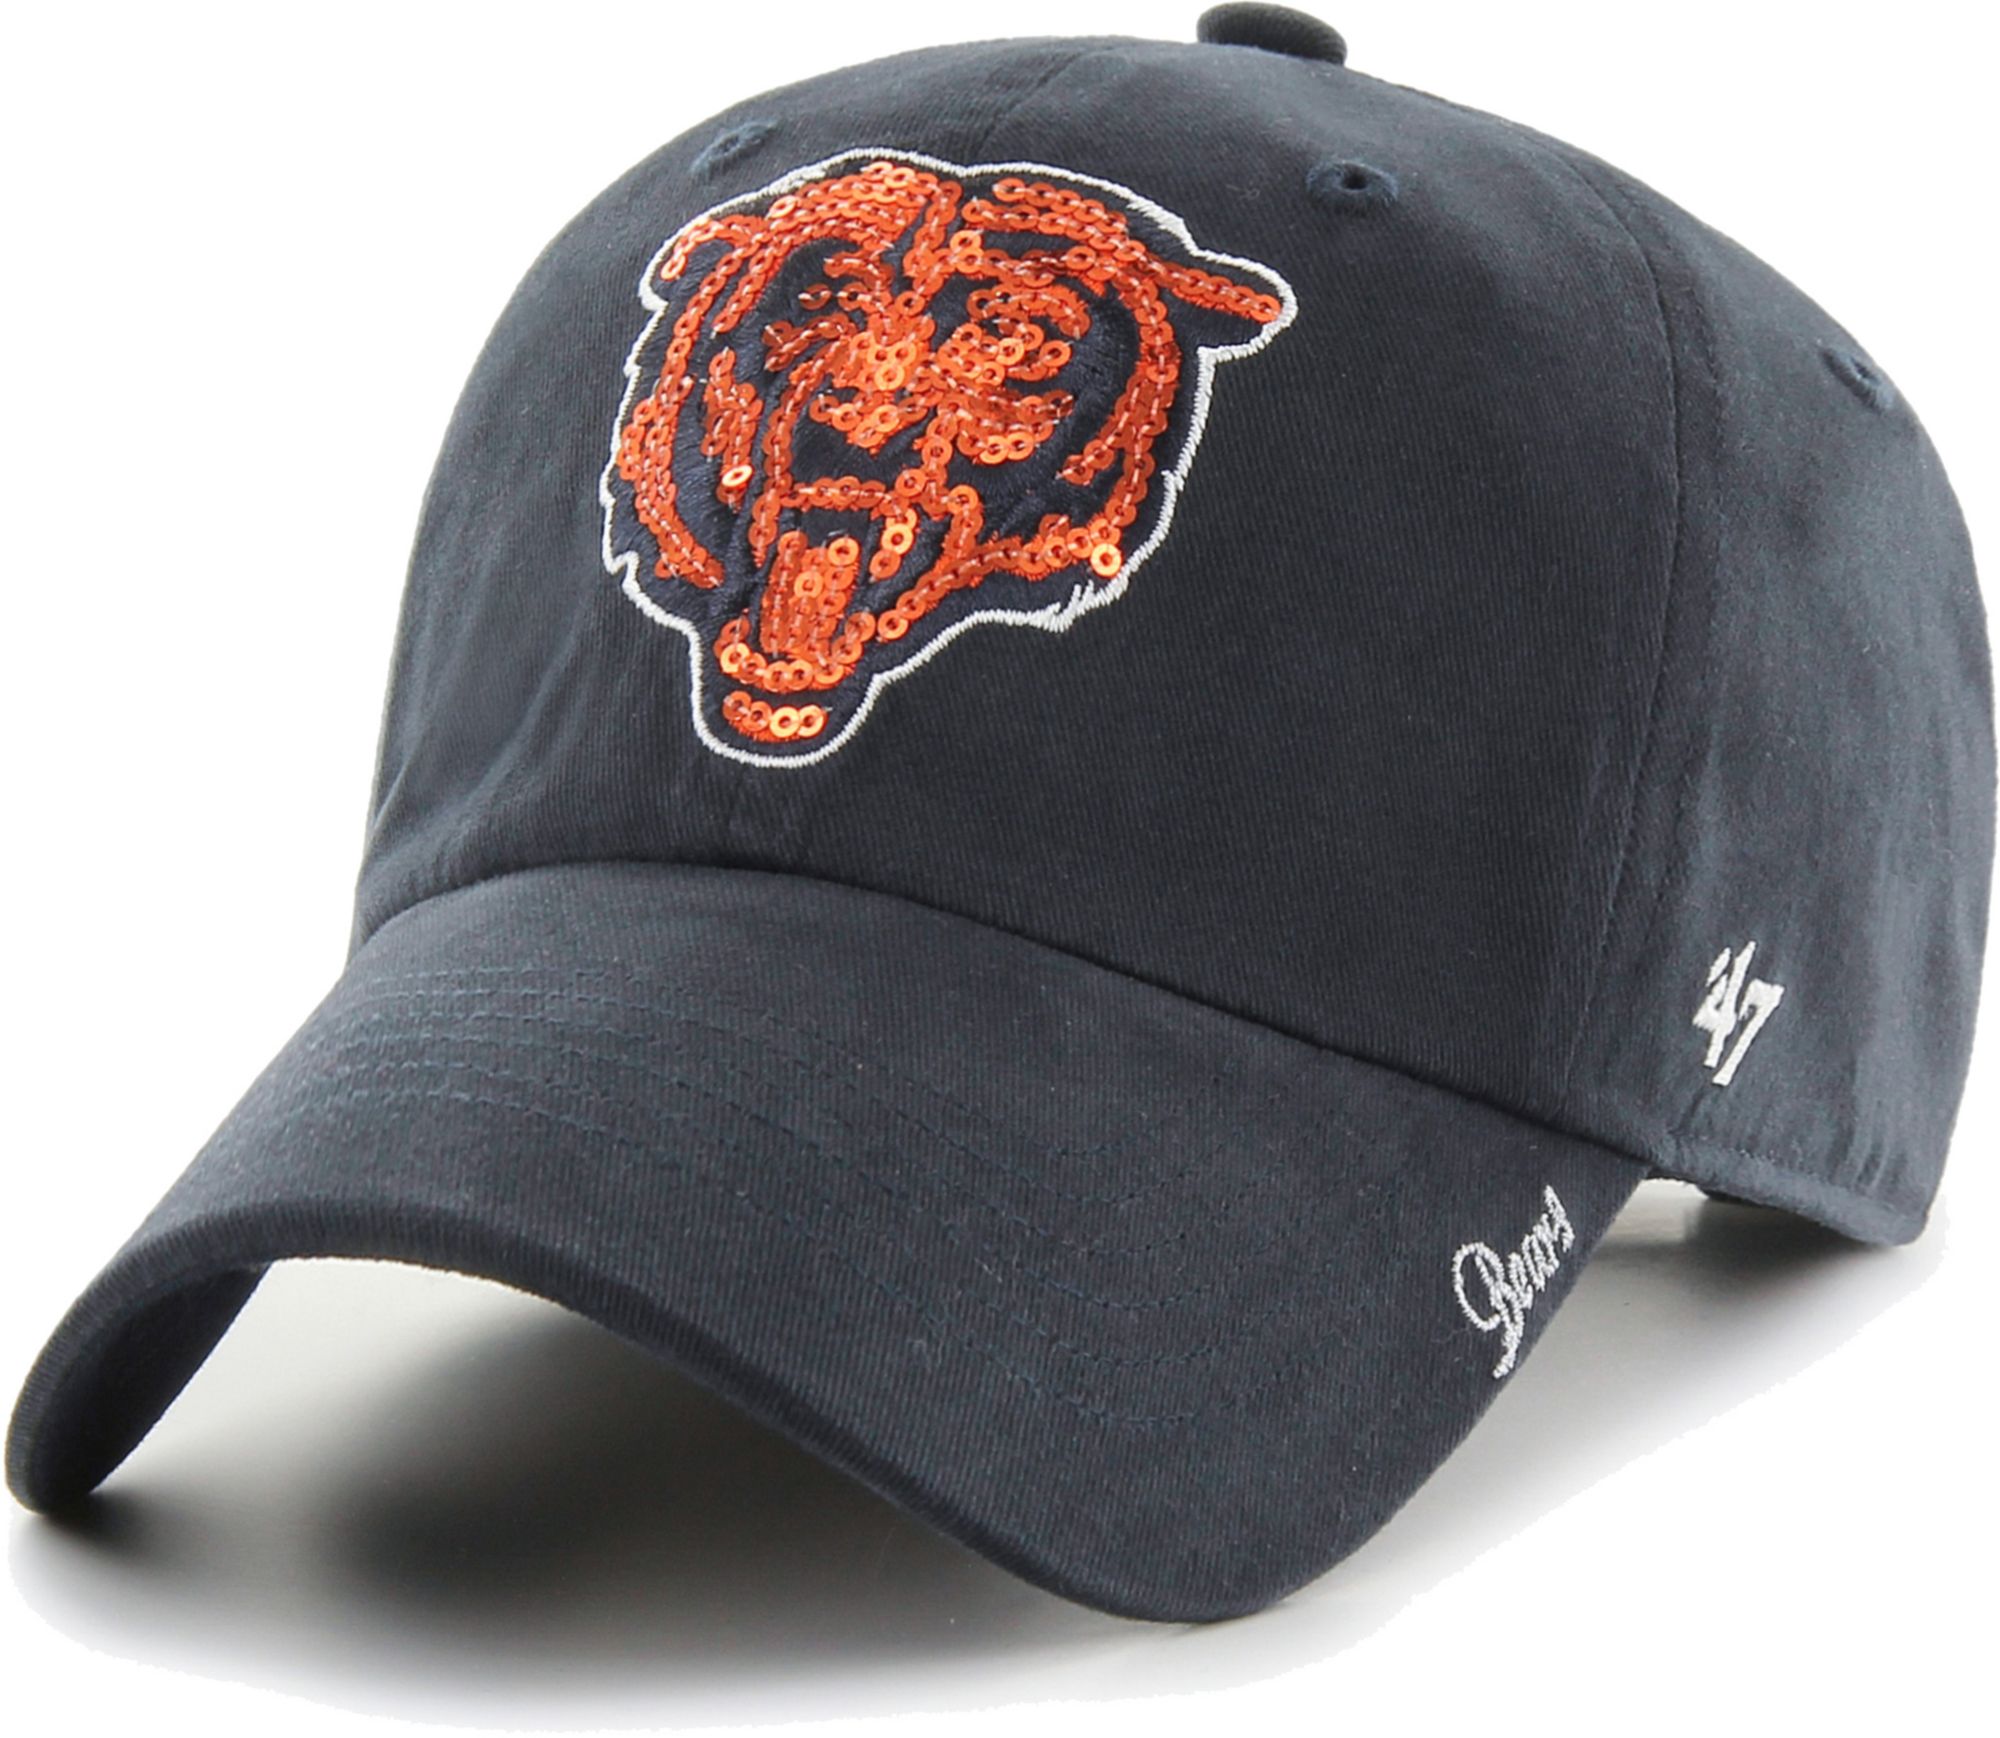 women's chicago bears hat